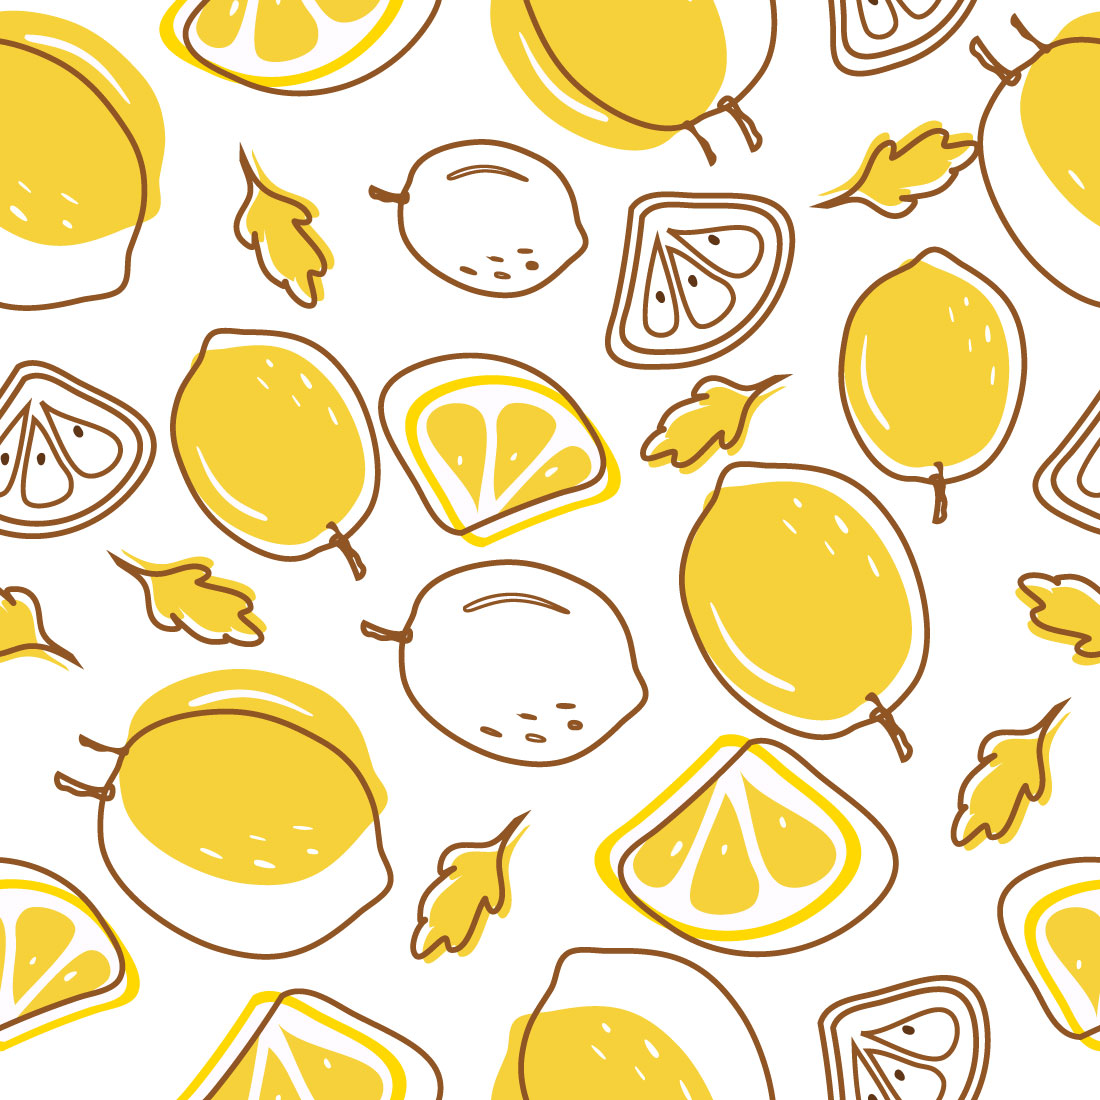 Lemon Seamless Pattern cover image.